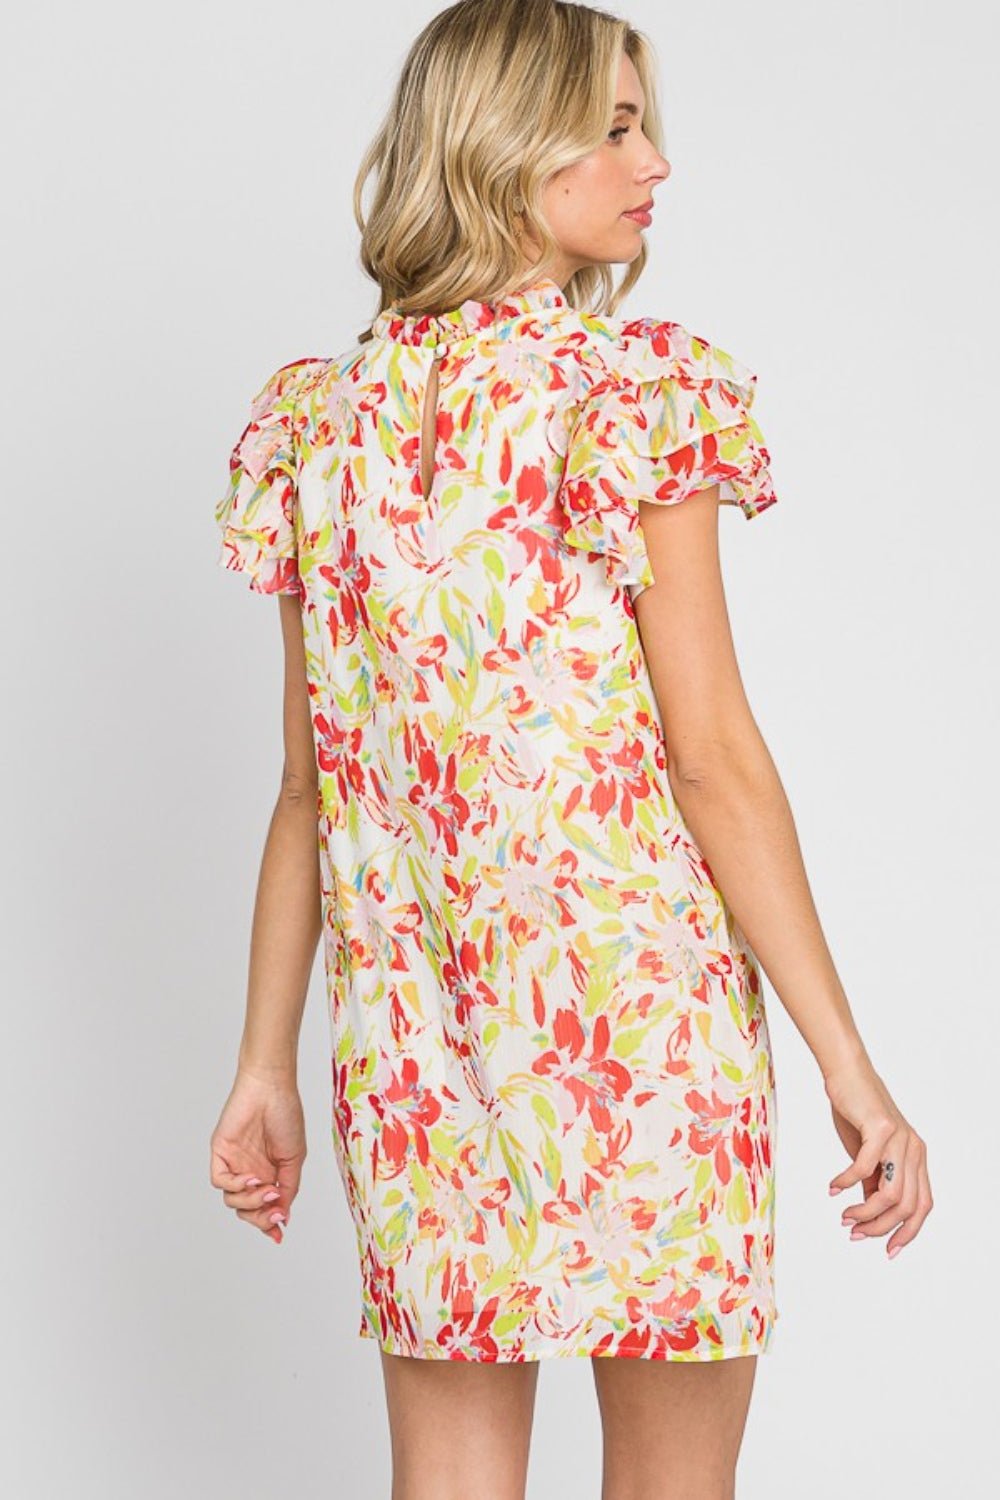 Floral Short Sleeve Mini Dress - KECHENFS